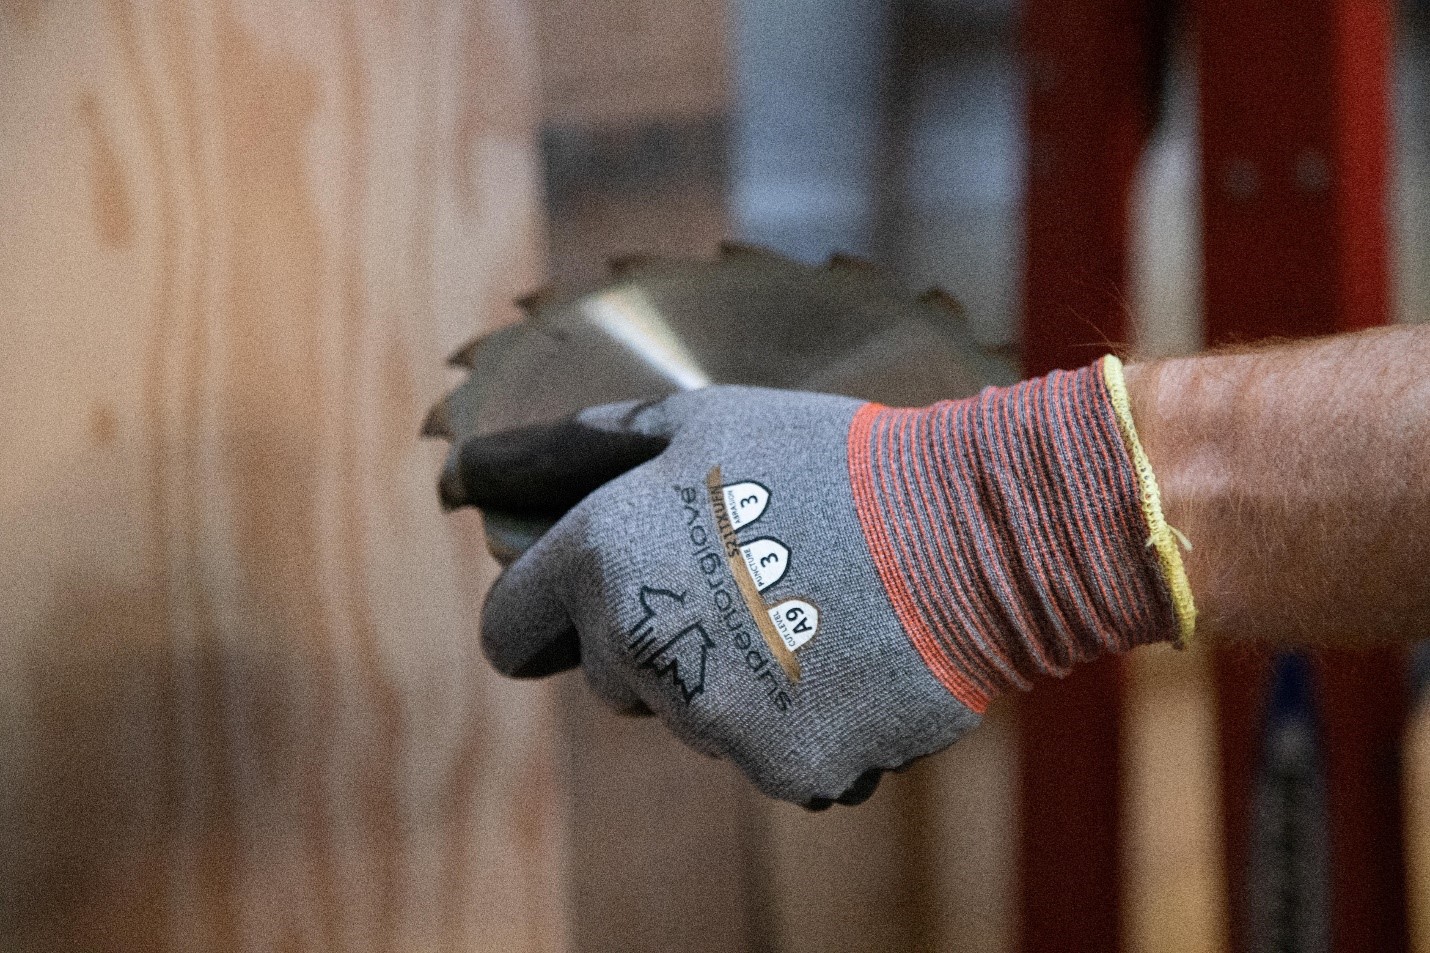 Vinyl protective gloves, Protective gloves for drug testing